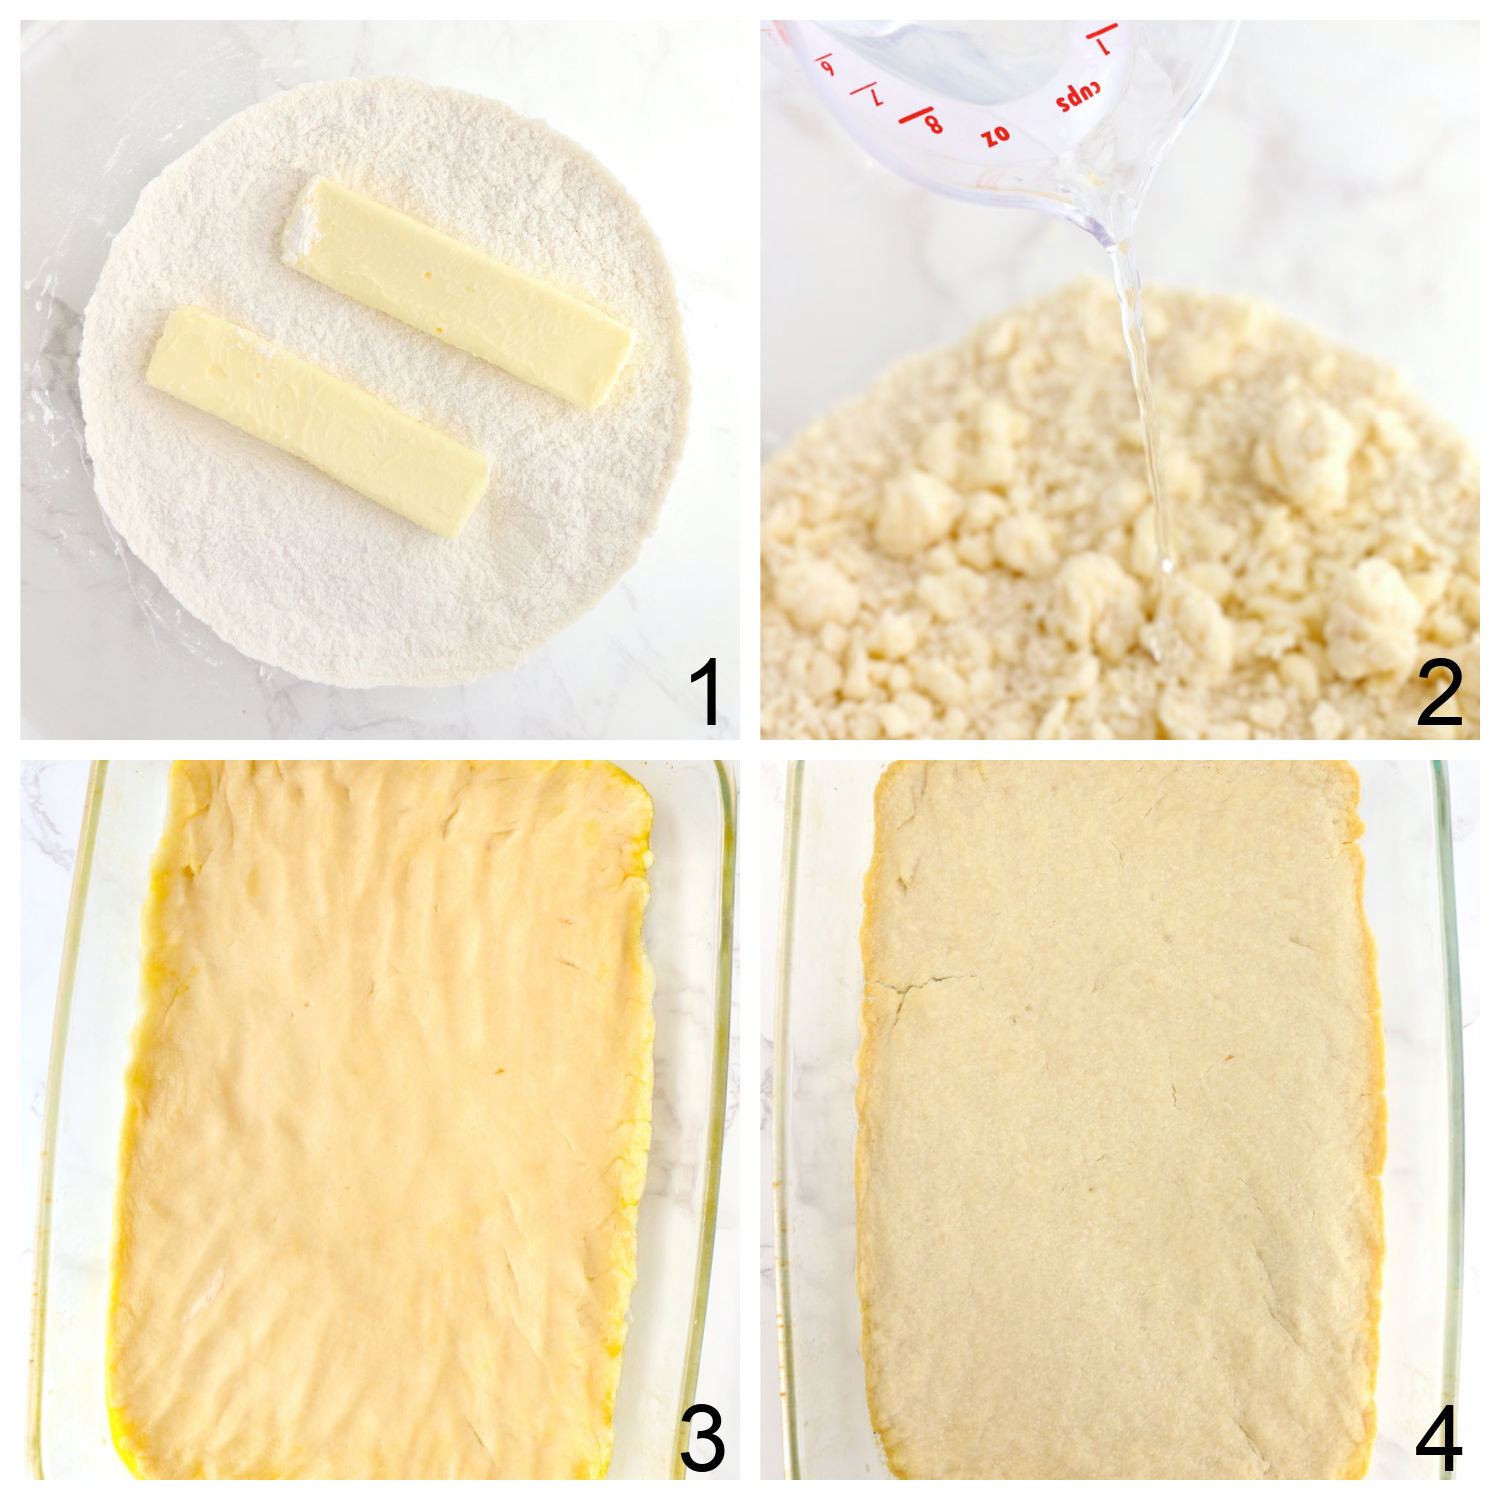 steps for making Kuchen dough